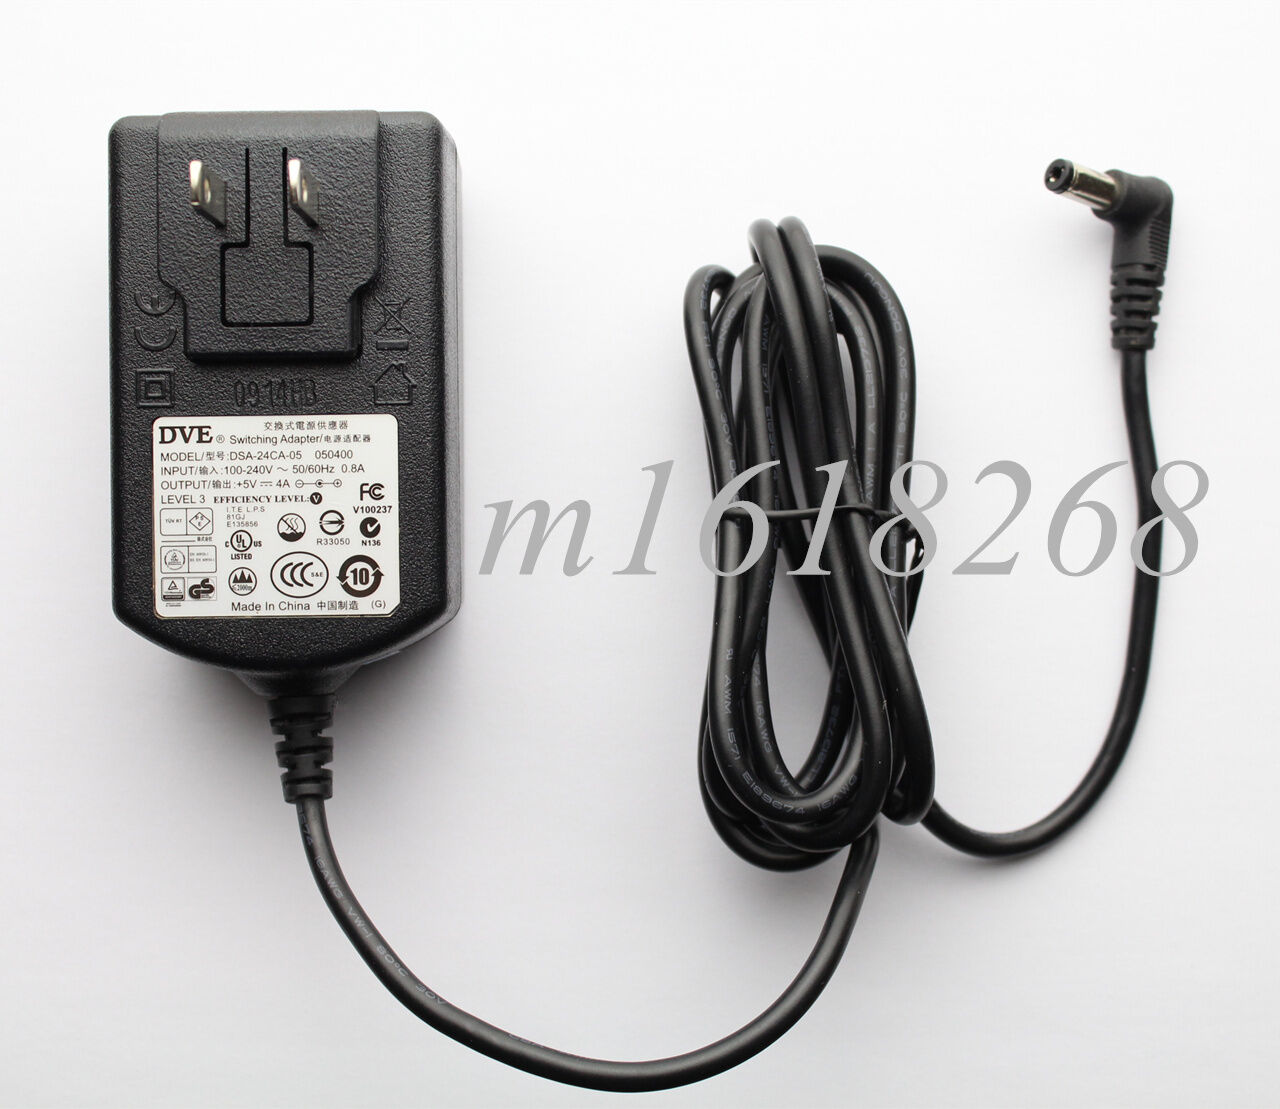 Original DVE Switching Adaptor Model DSA-24CA-05 050400 5V 4A Power AC Adapter Model: DSA-24CA-05 Type: AC ADA